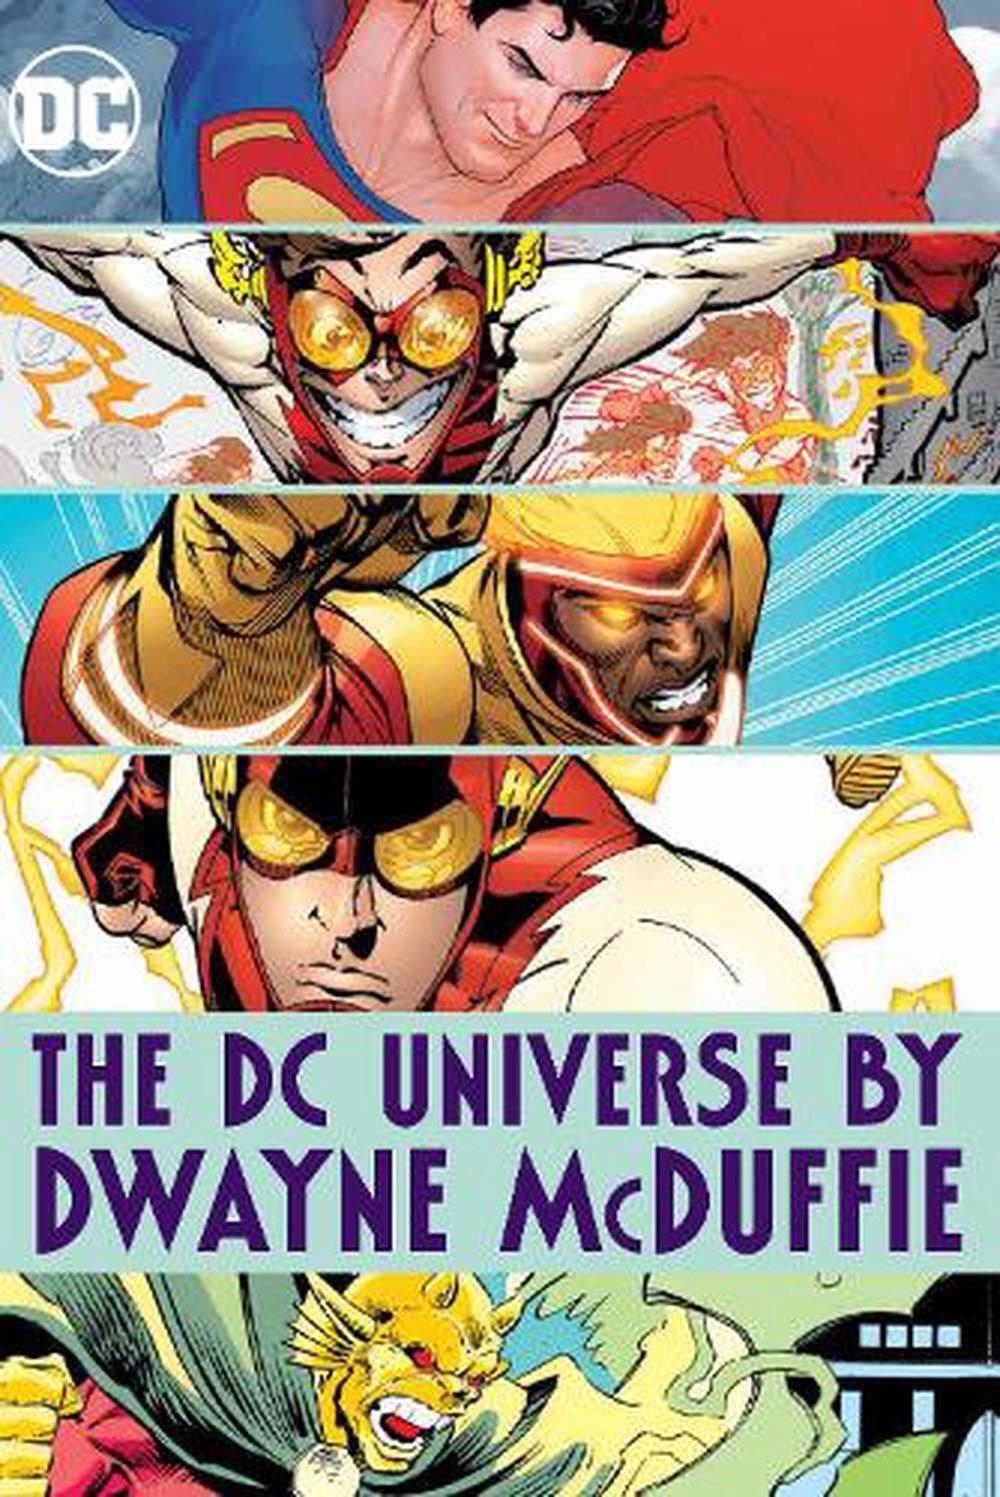 DC Universe by Dwayne McDuffie by Dwayne McDuffie (English) Hardcover Book